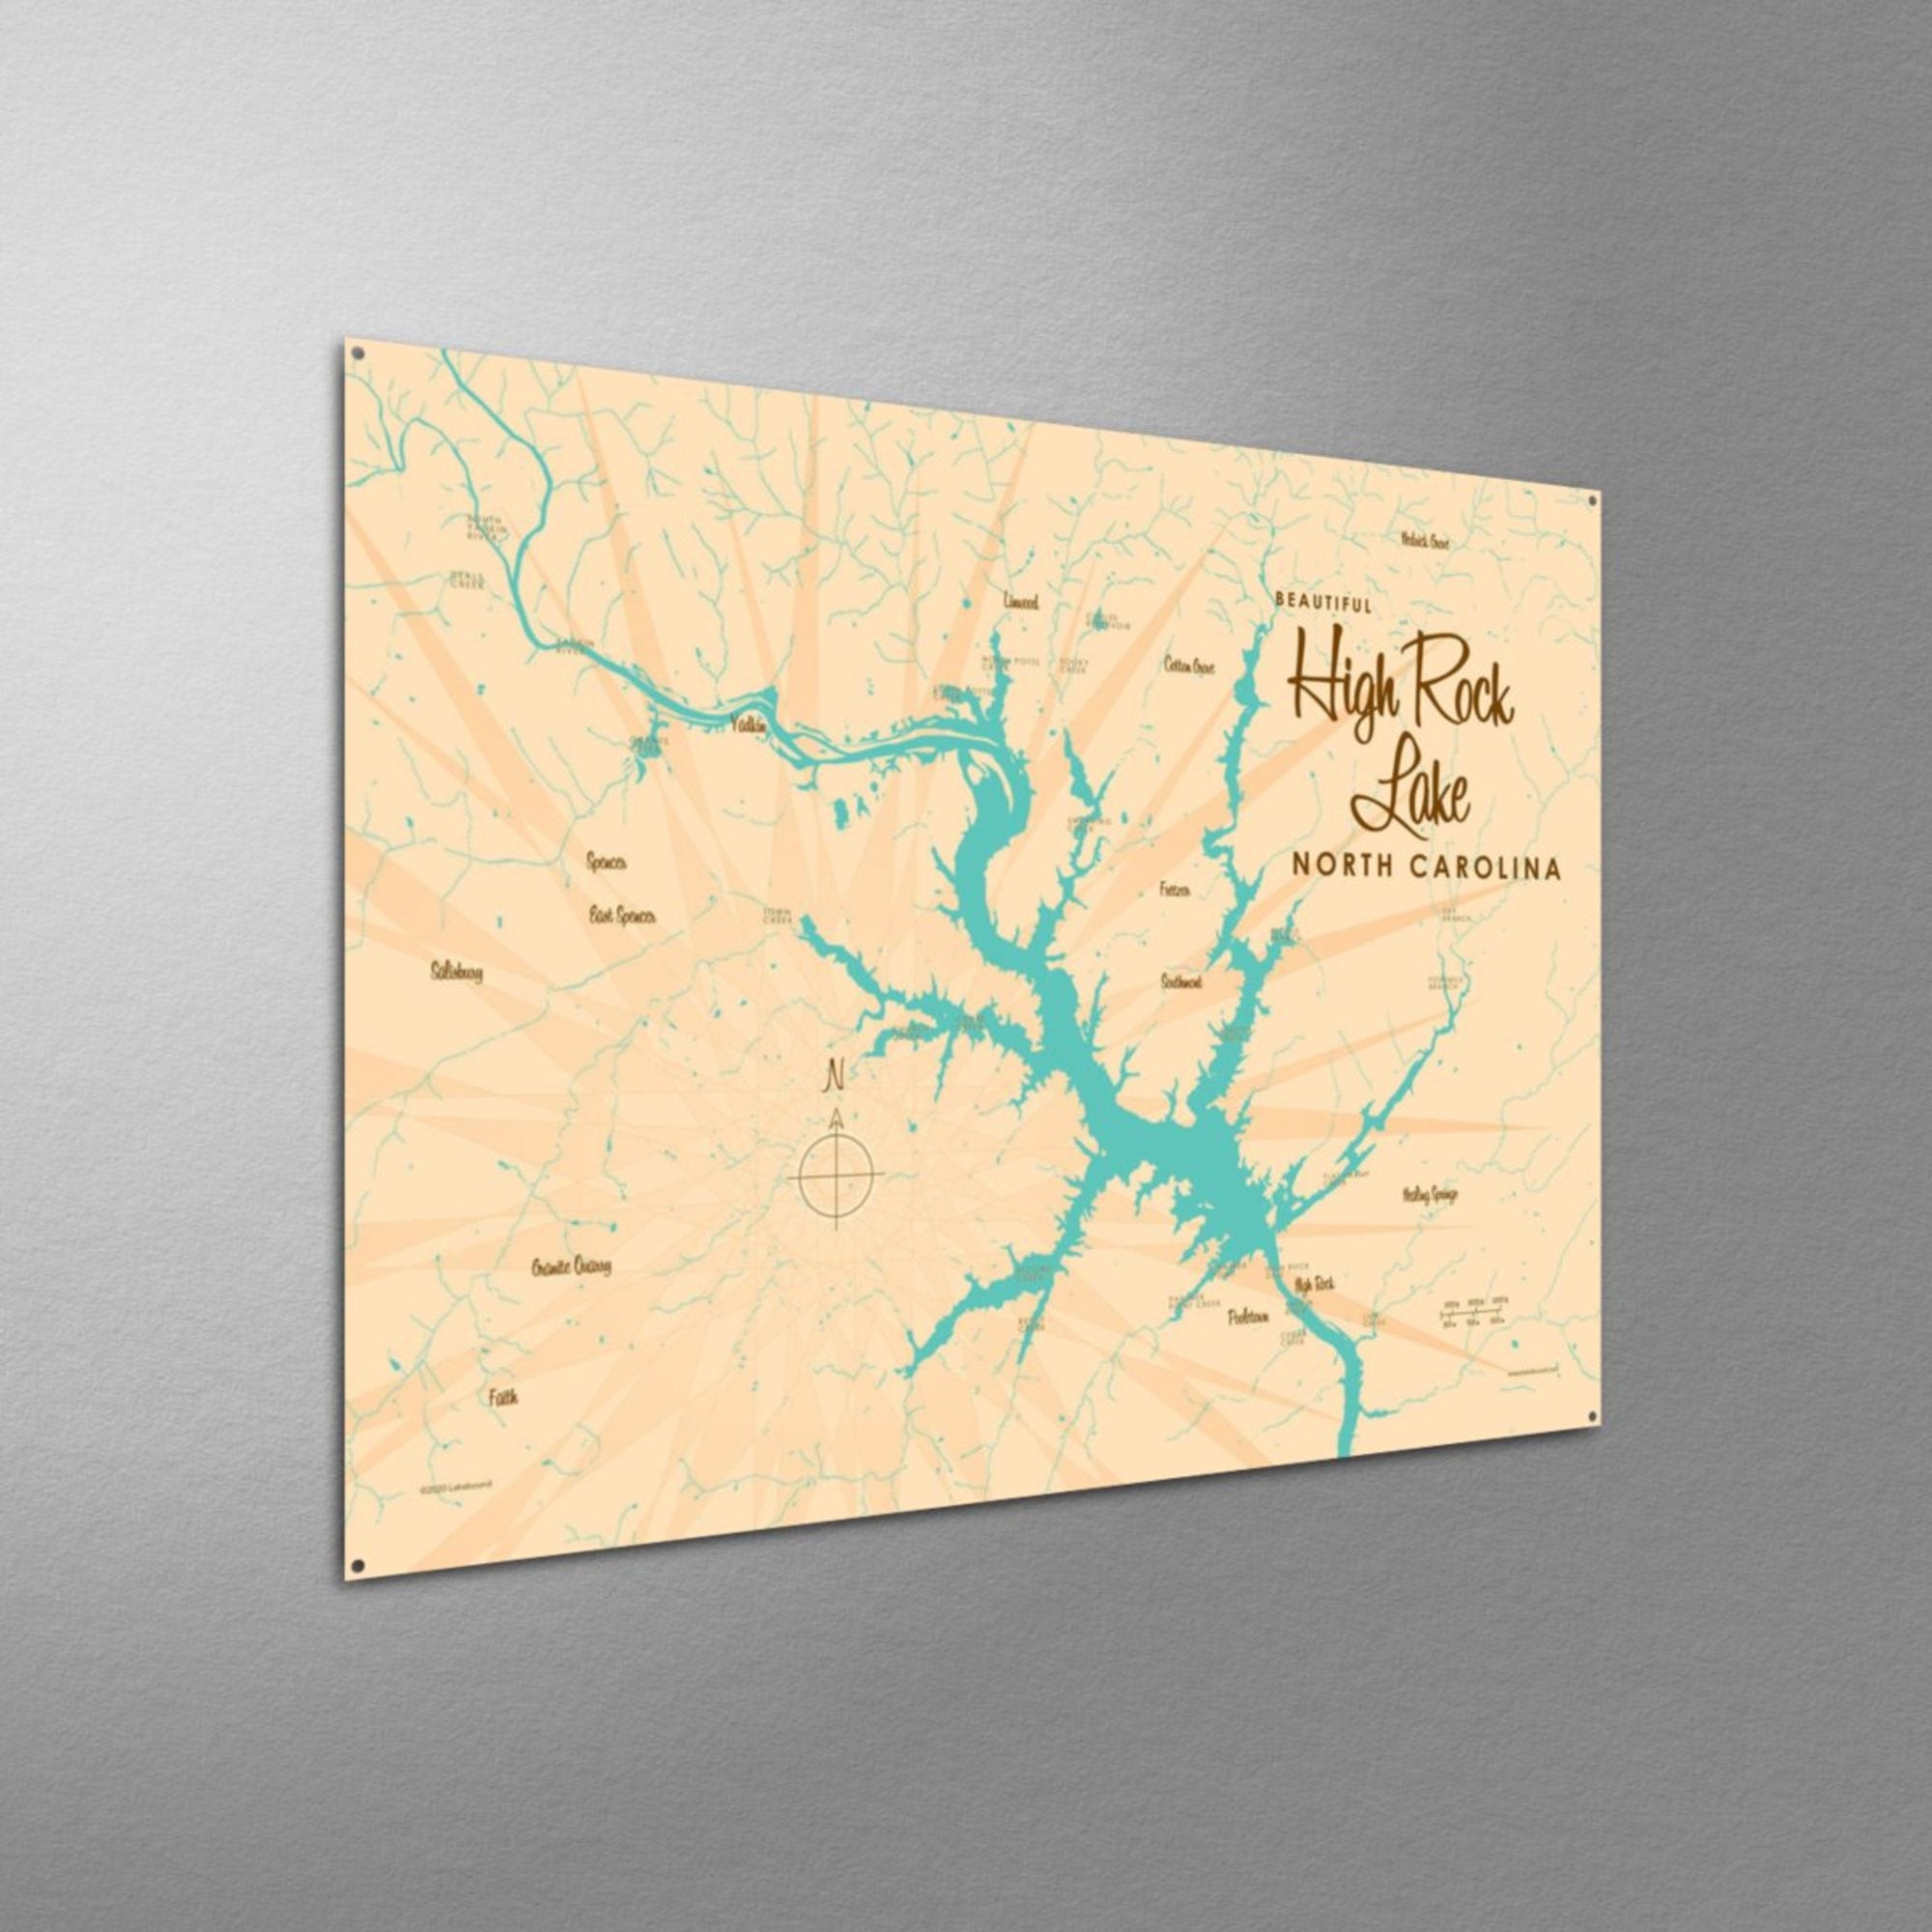 High Rock Lake North Carolina, Metal Sign Map Art